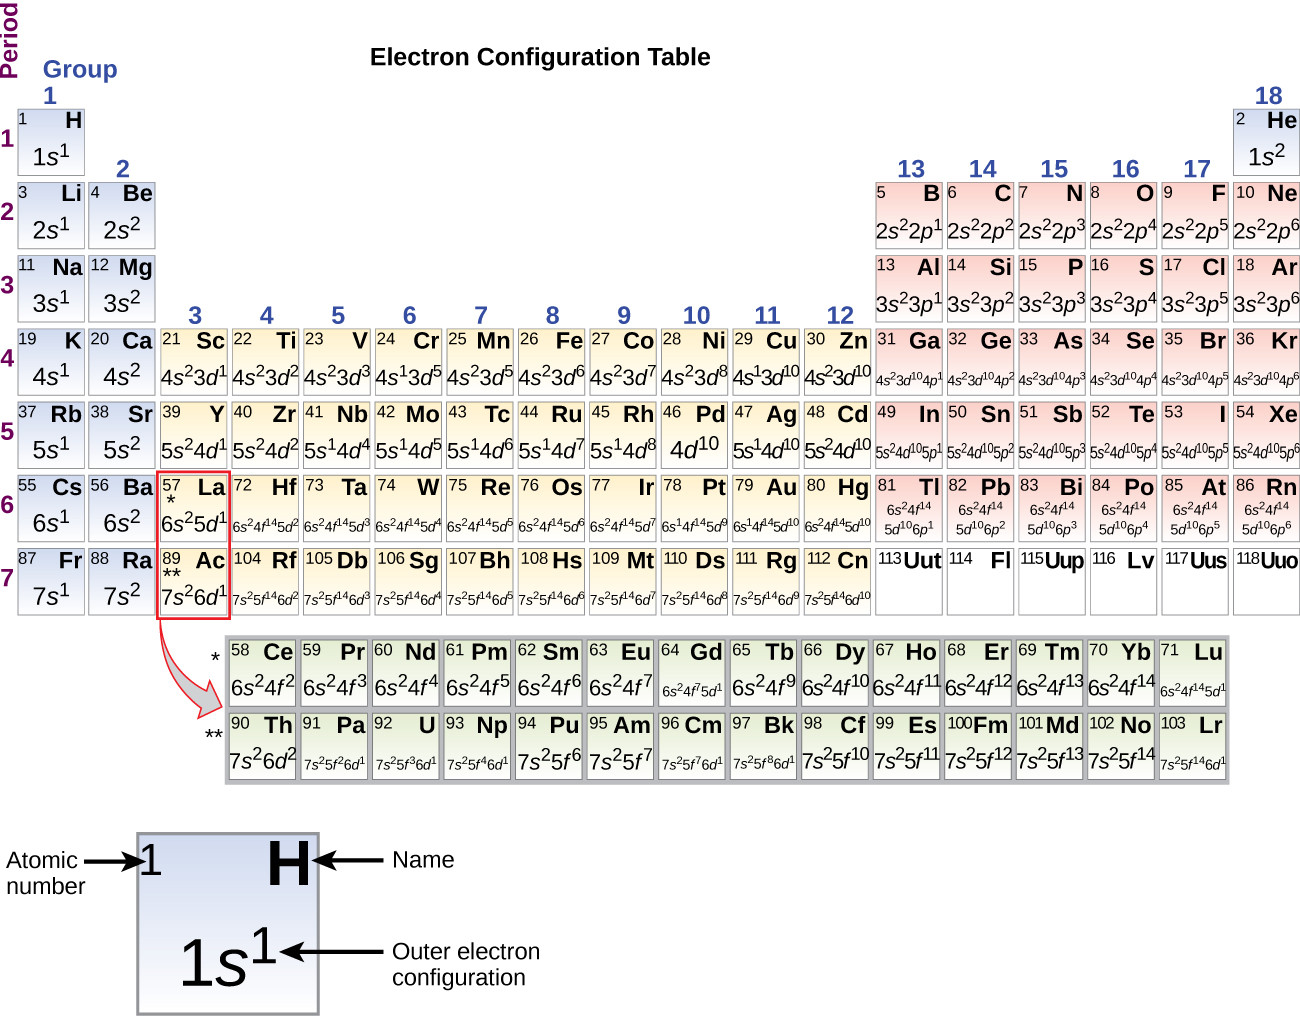 Electron Configuration Chart